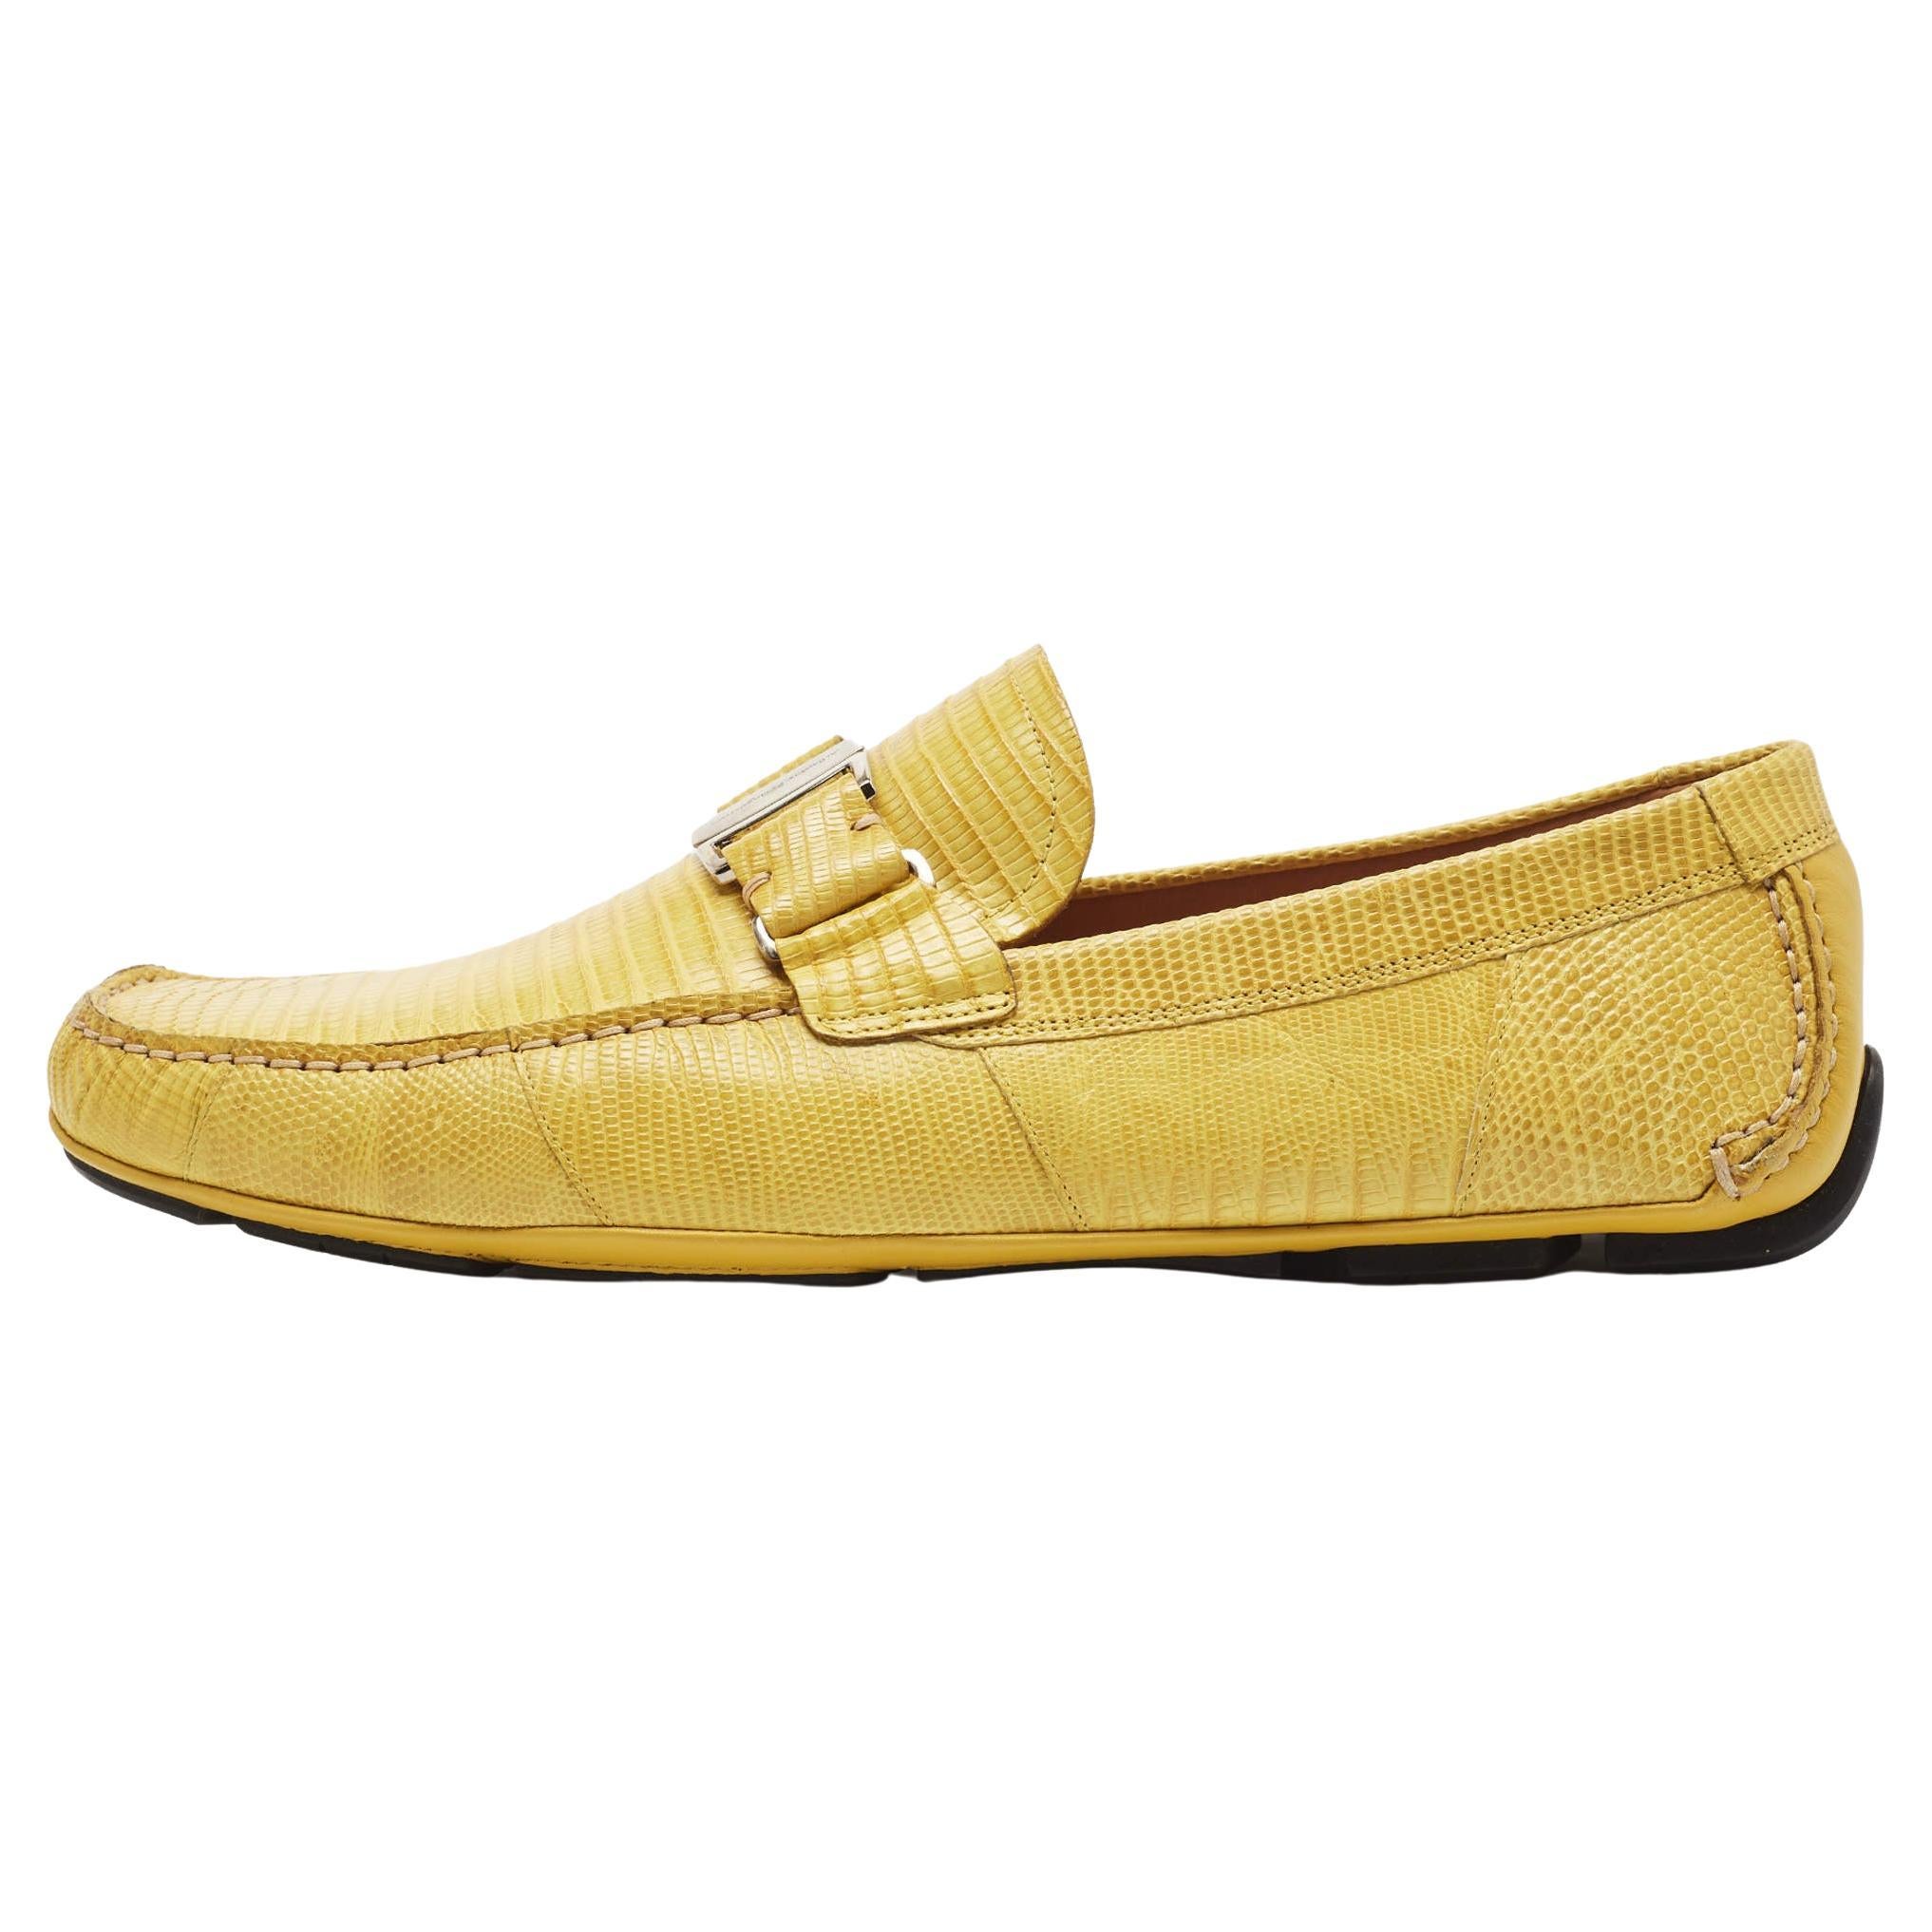 Salvatore Ferragamo Yellow Lizard Sardegna Loafers Size 44.5